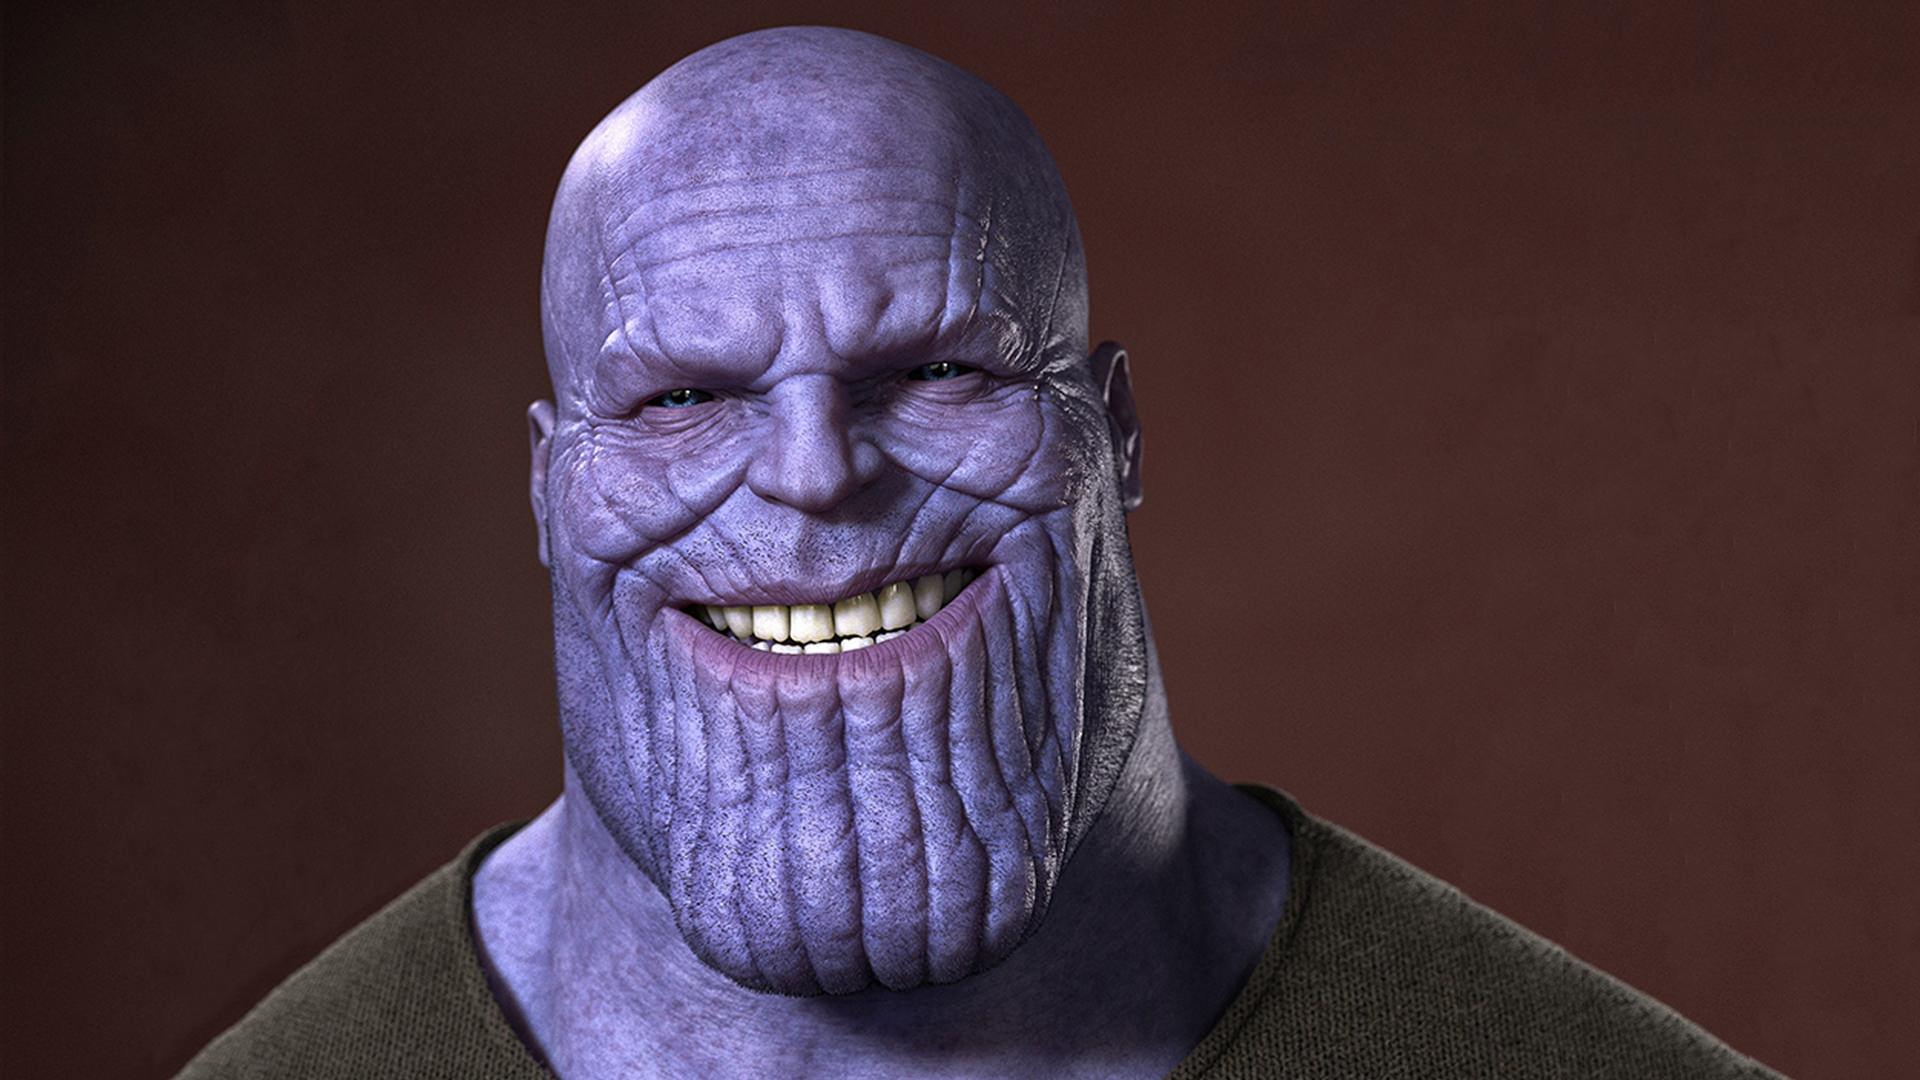 Thanos Smiling Wallpaper, HD Movies 4K Wallpaper, Image, Photo